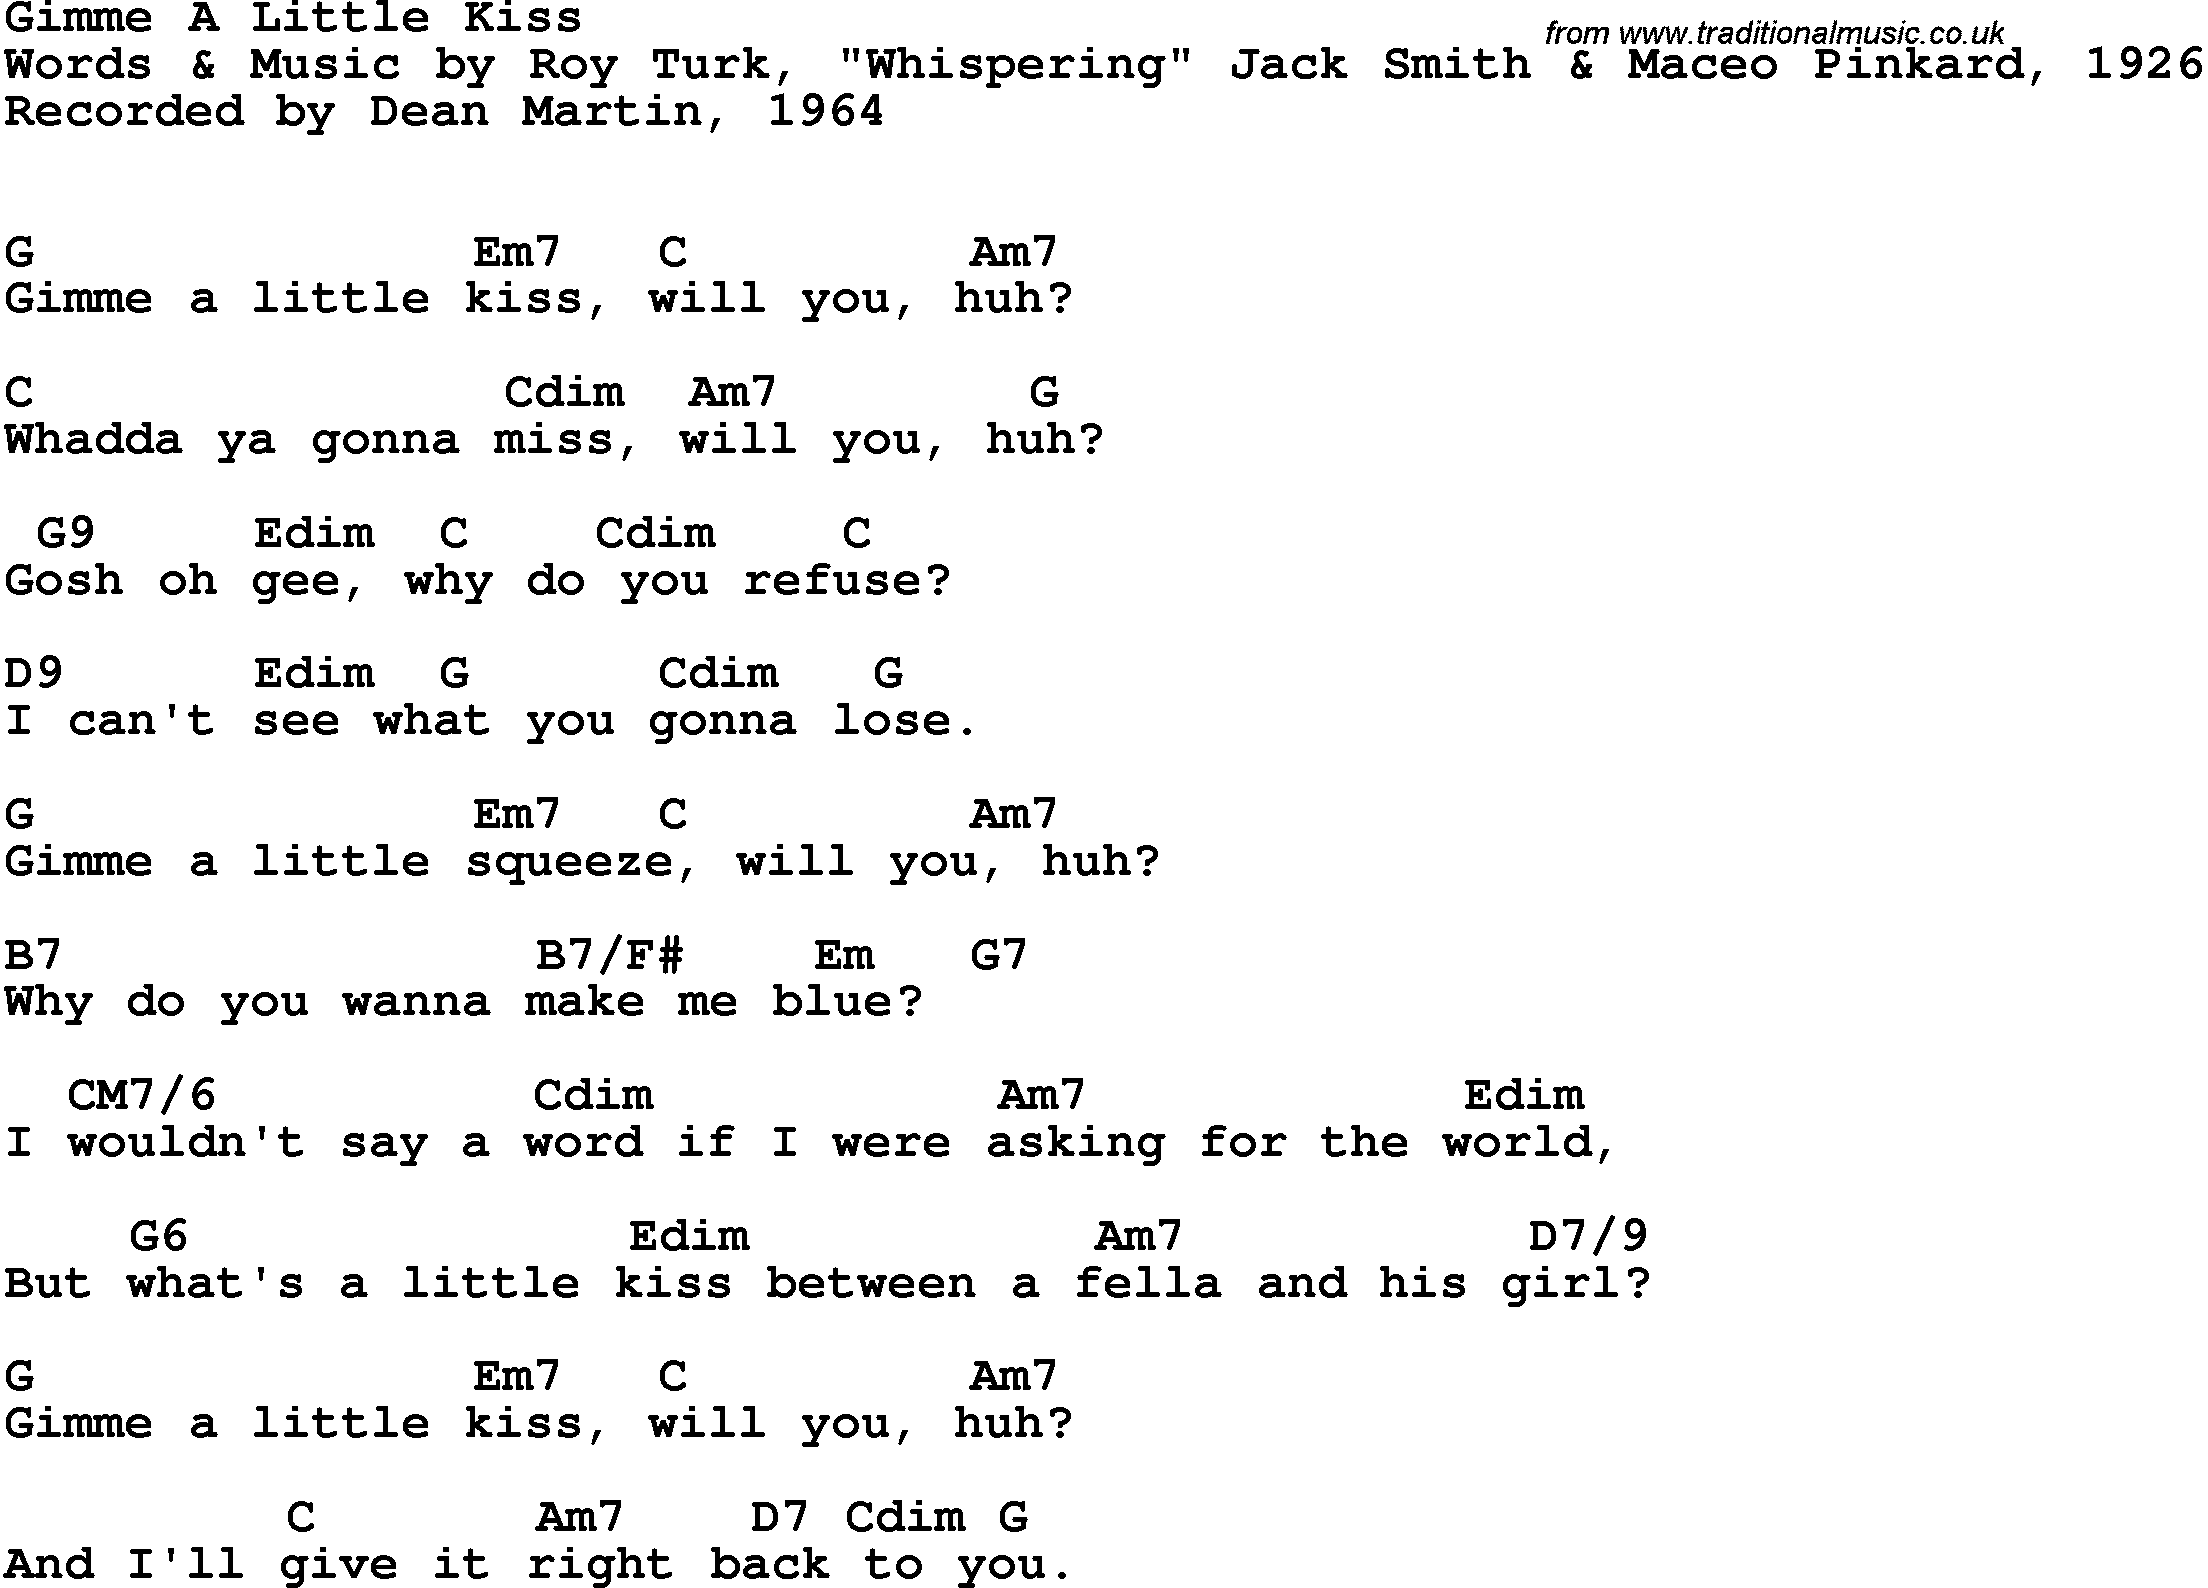 Song Lyrics with guitar chords for Gimme A Little Kiss - Dean Martin, 1964